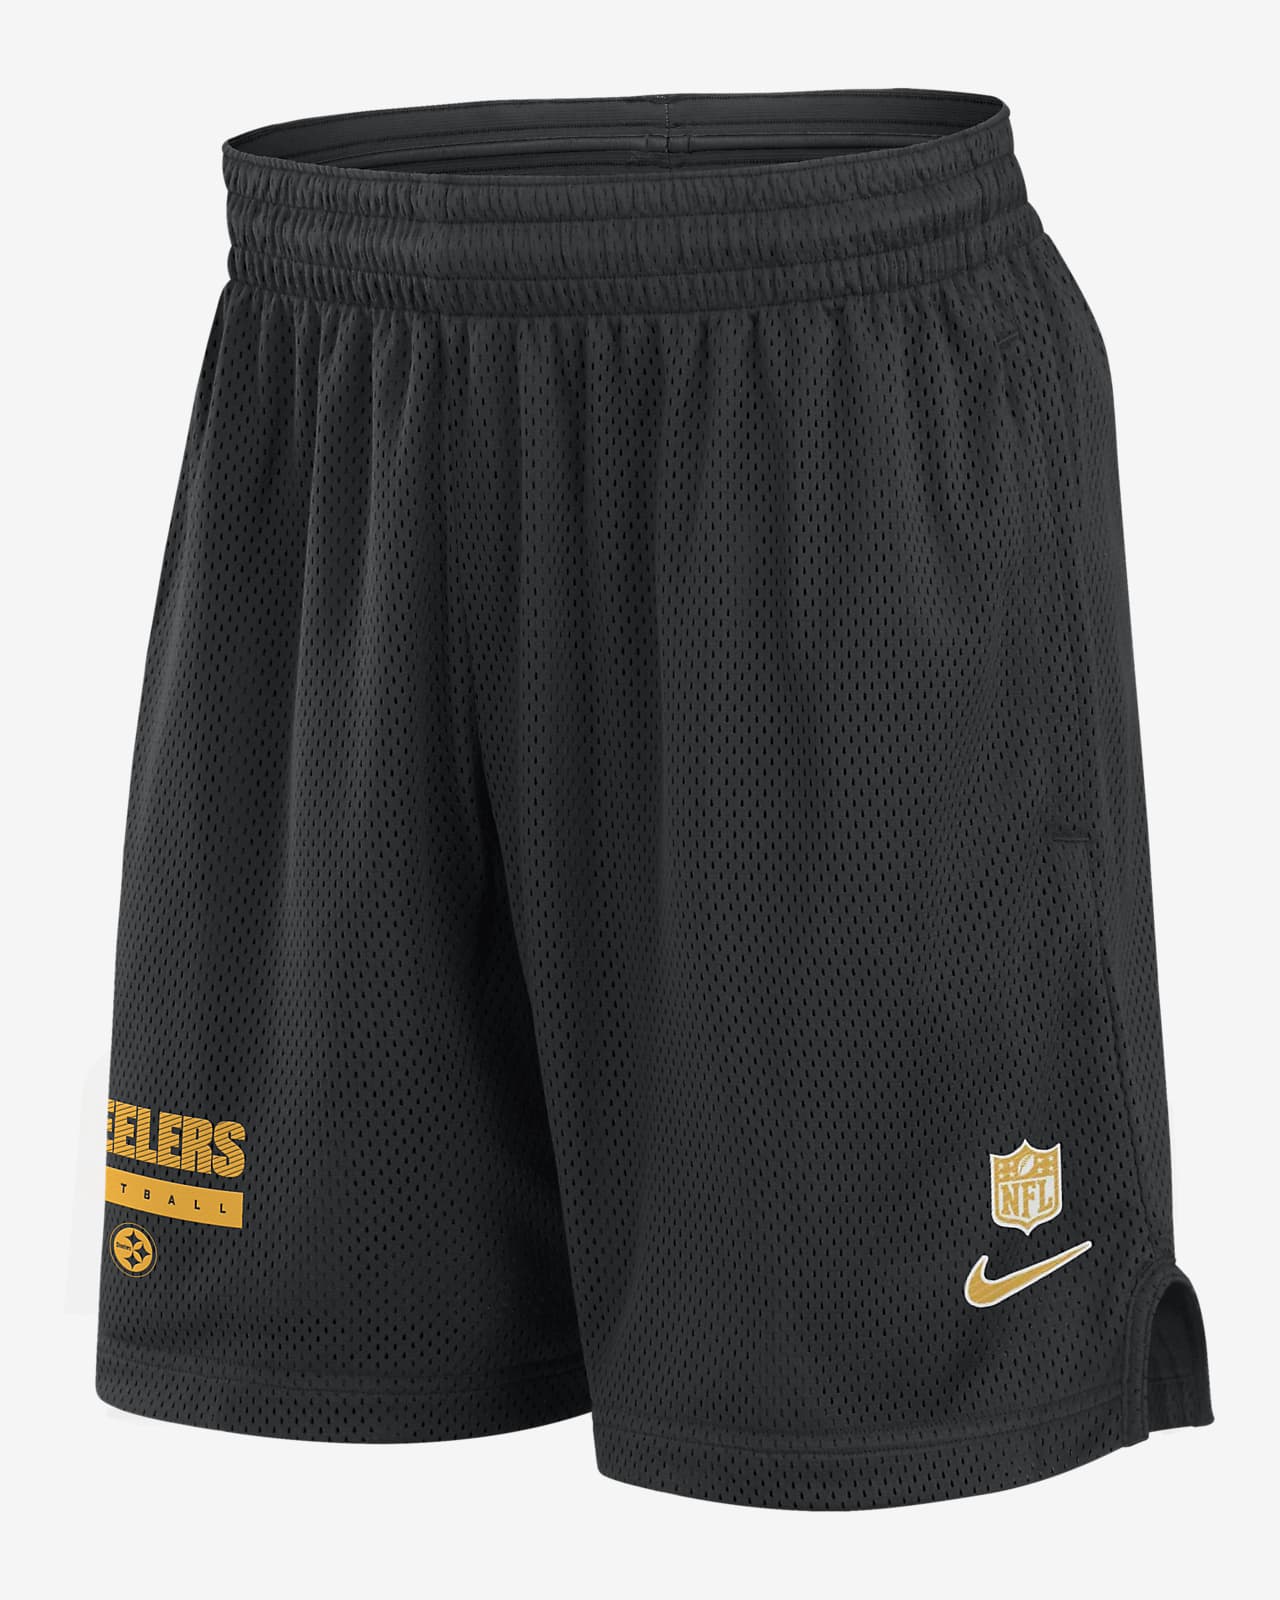 Shorts Nike Dri-FIT de la NFL para hombre Pittsburgh Steelers Sideline